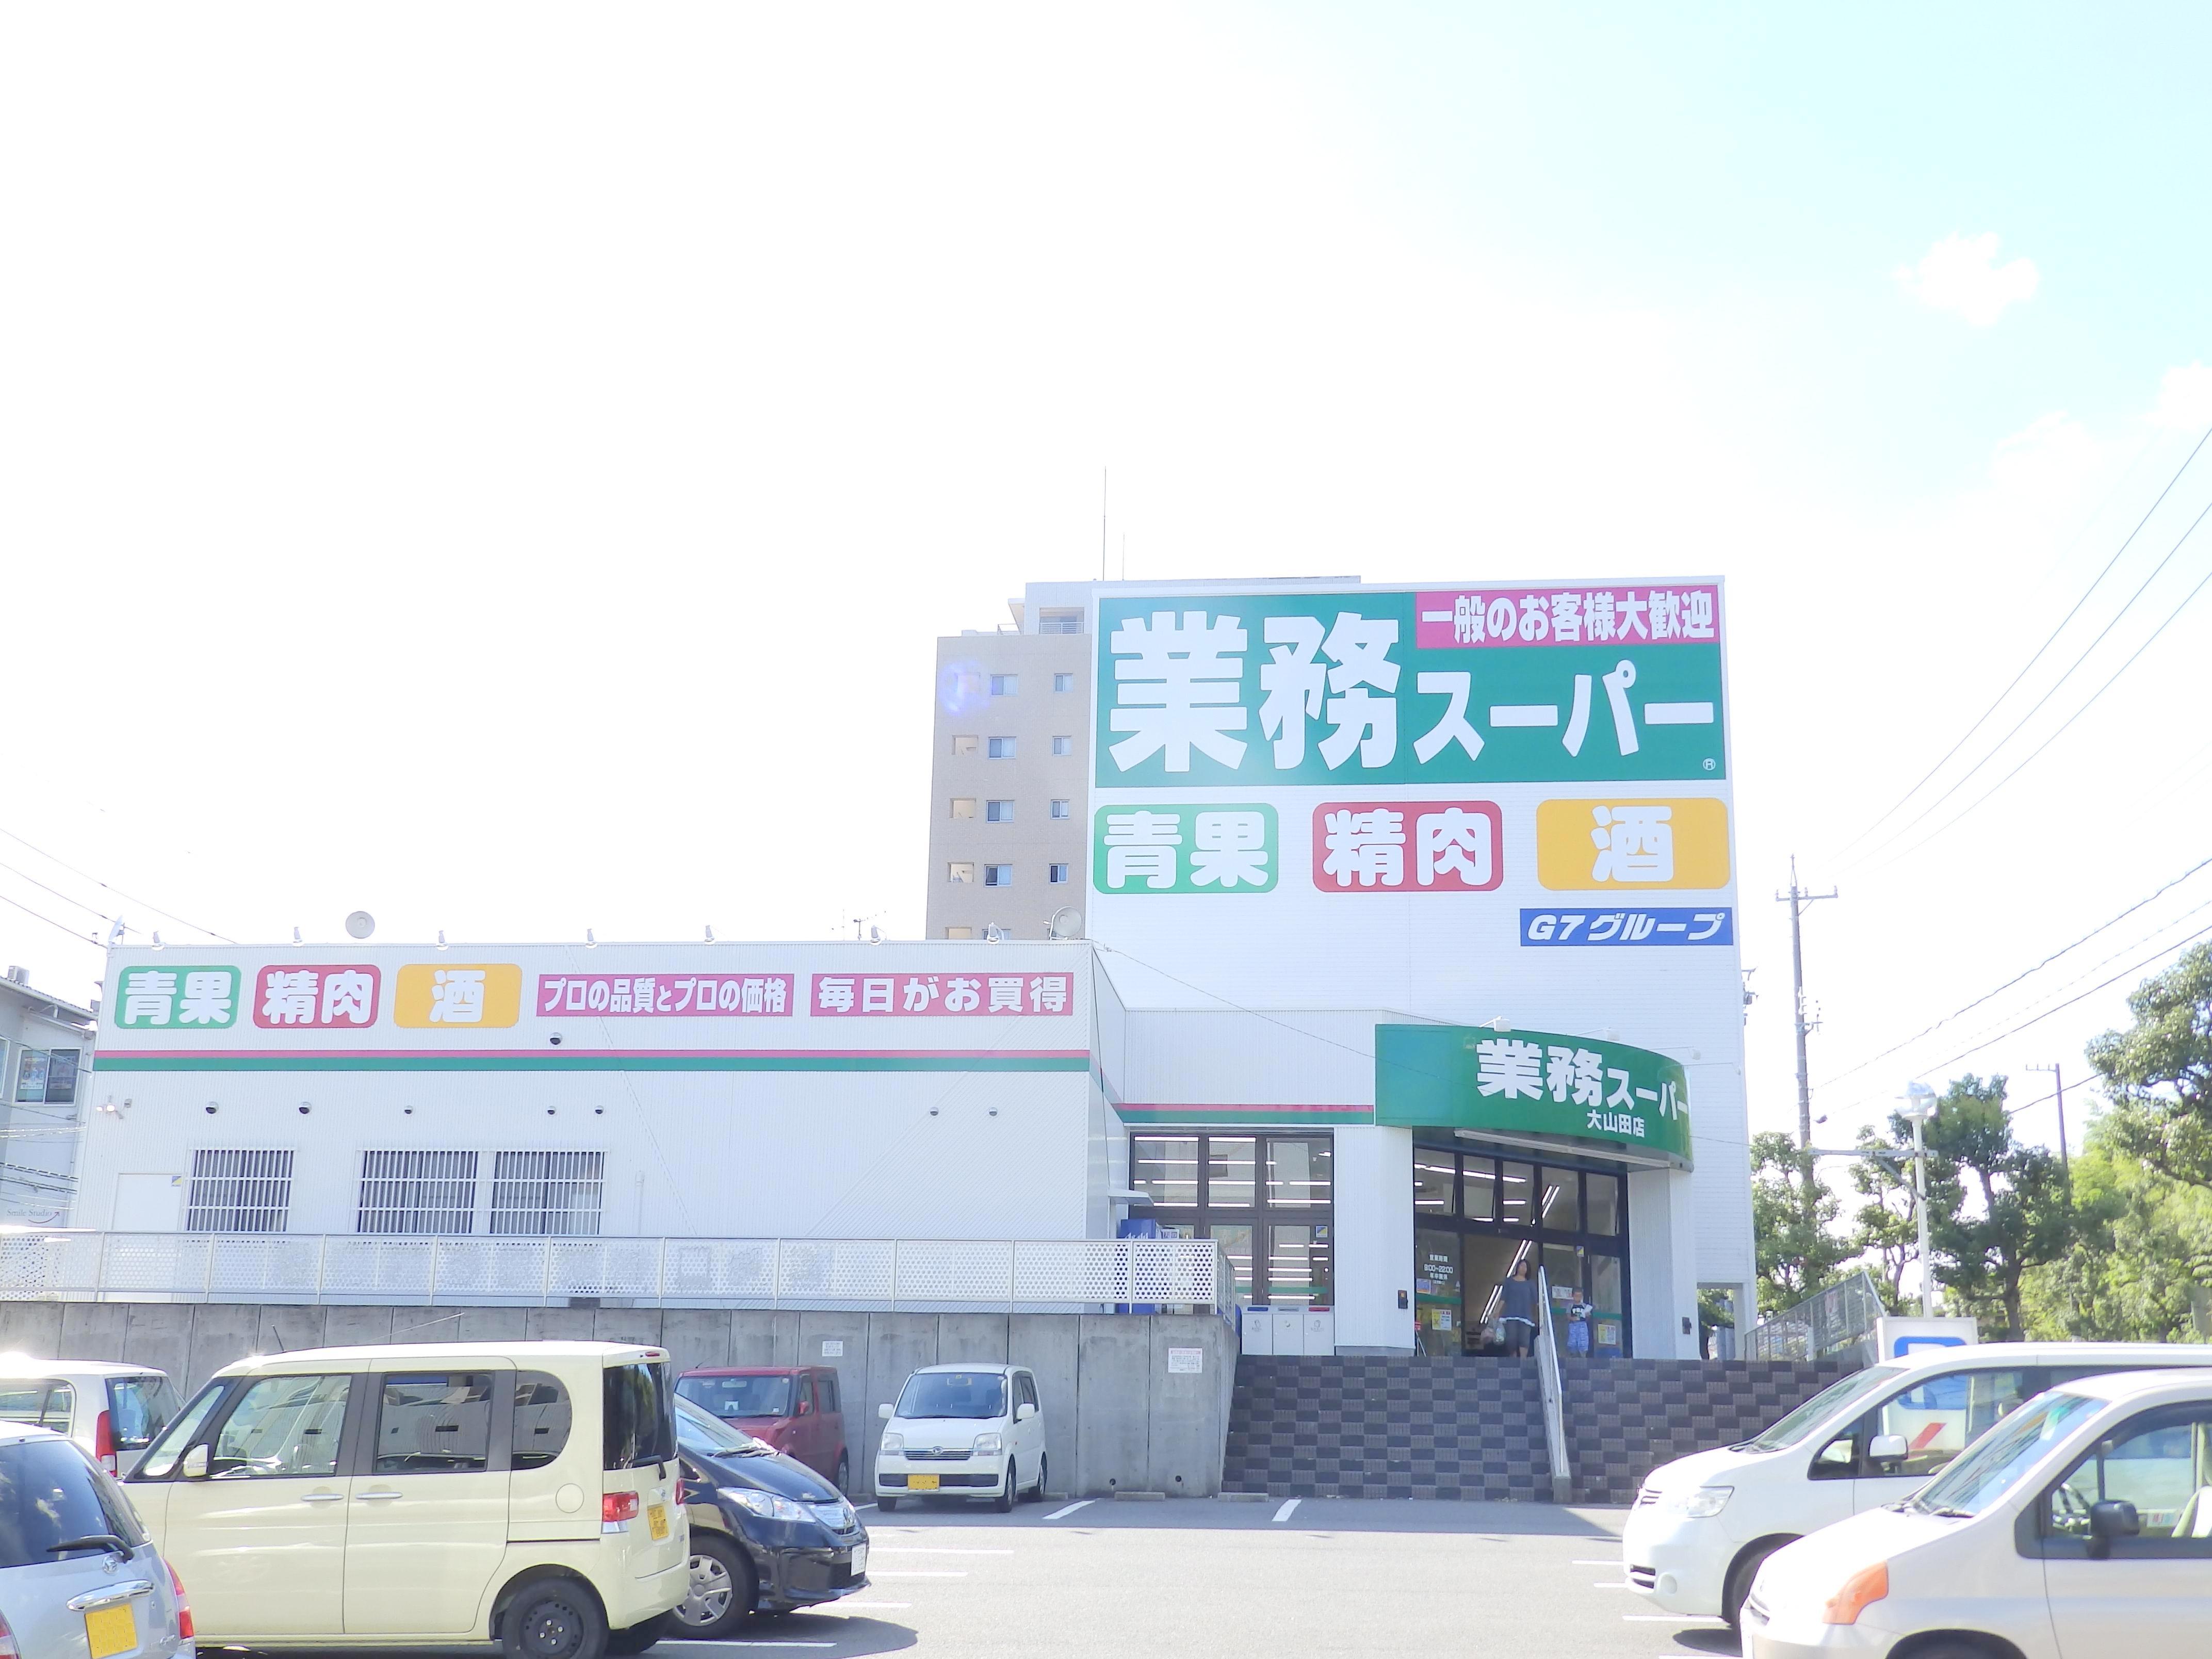 Supermarket. 1308m to business super Oyamada store (Super)